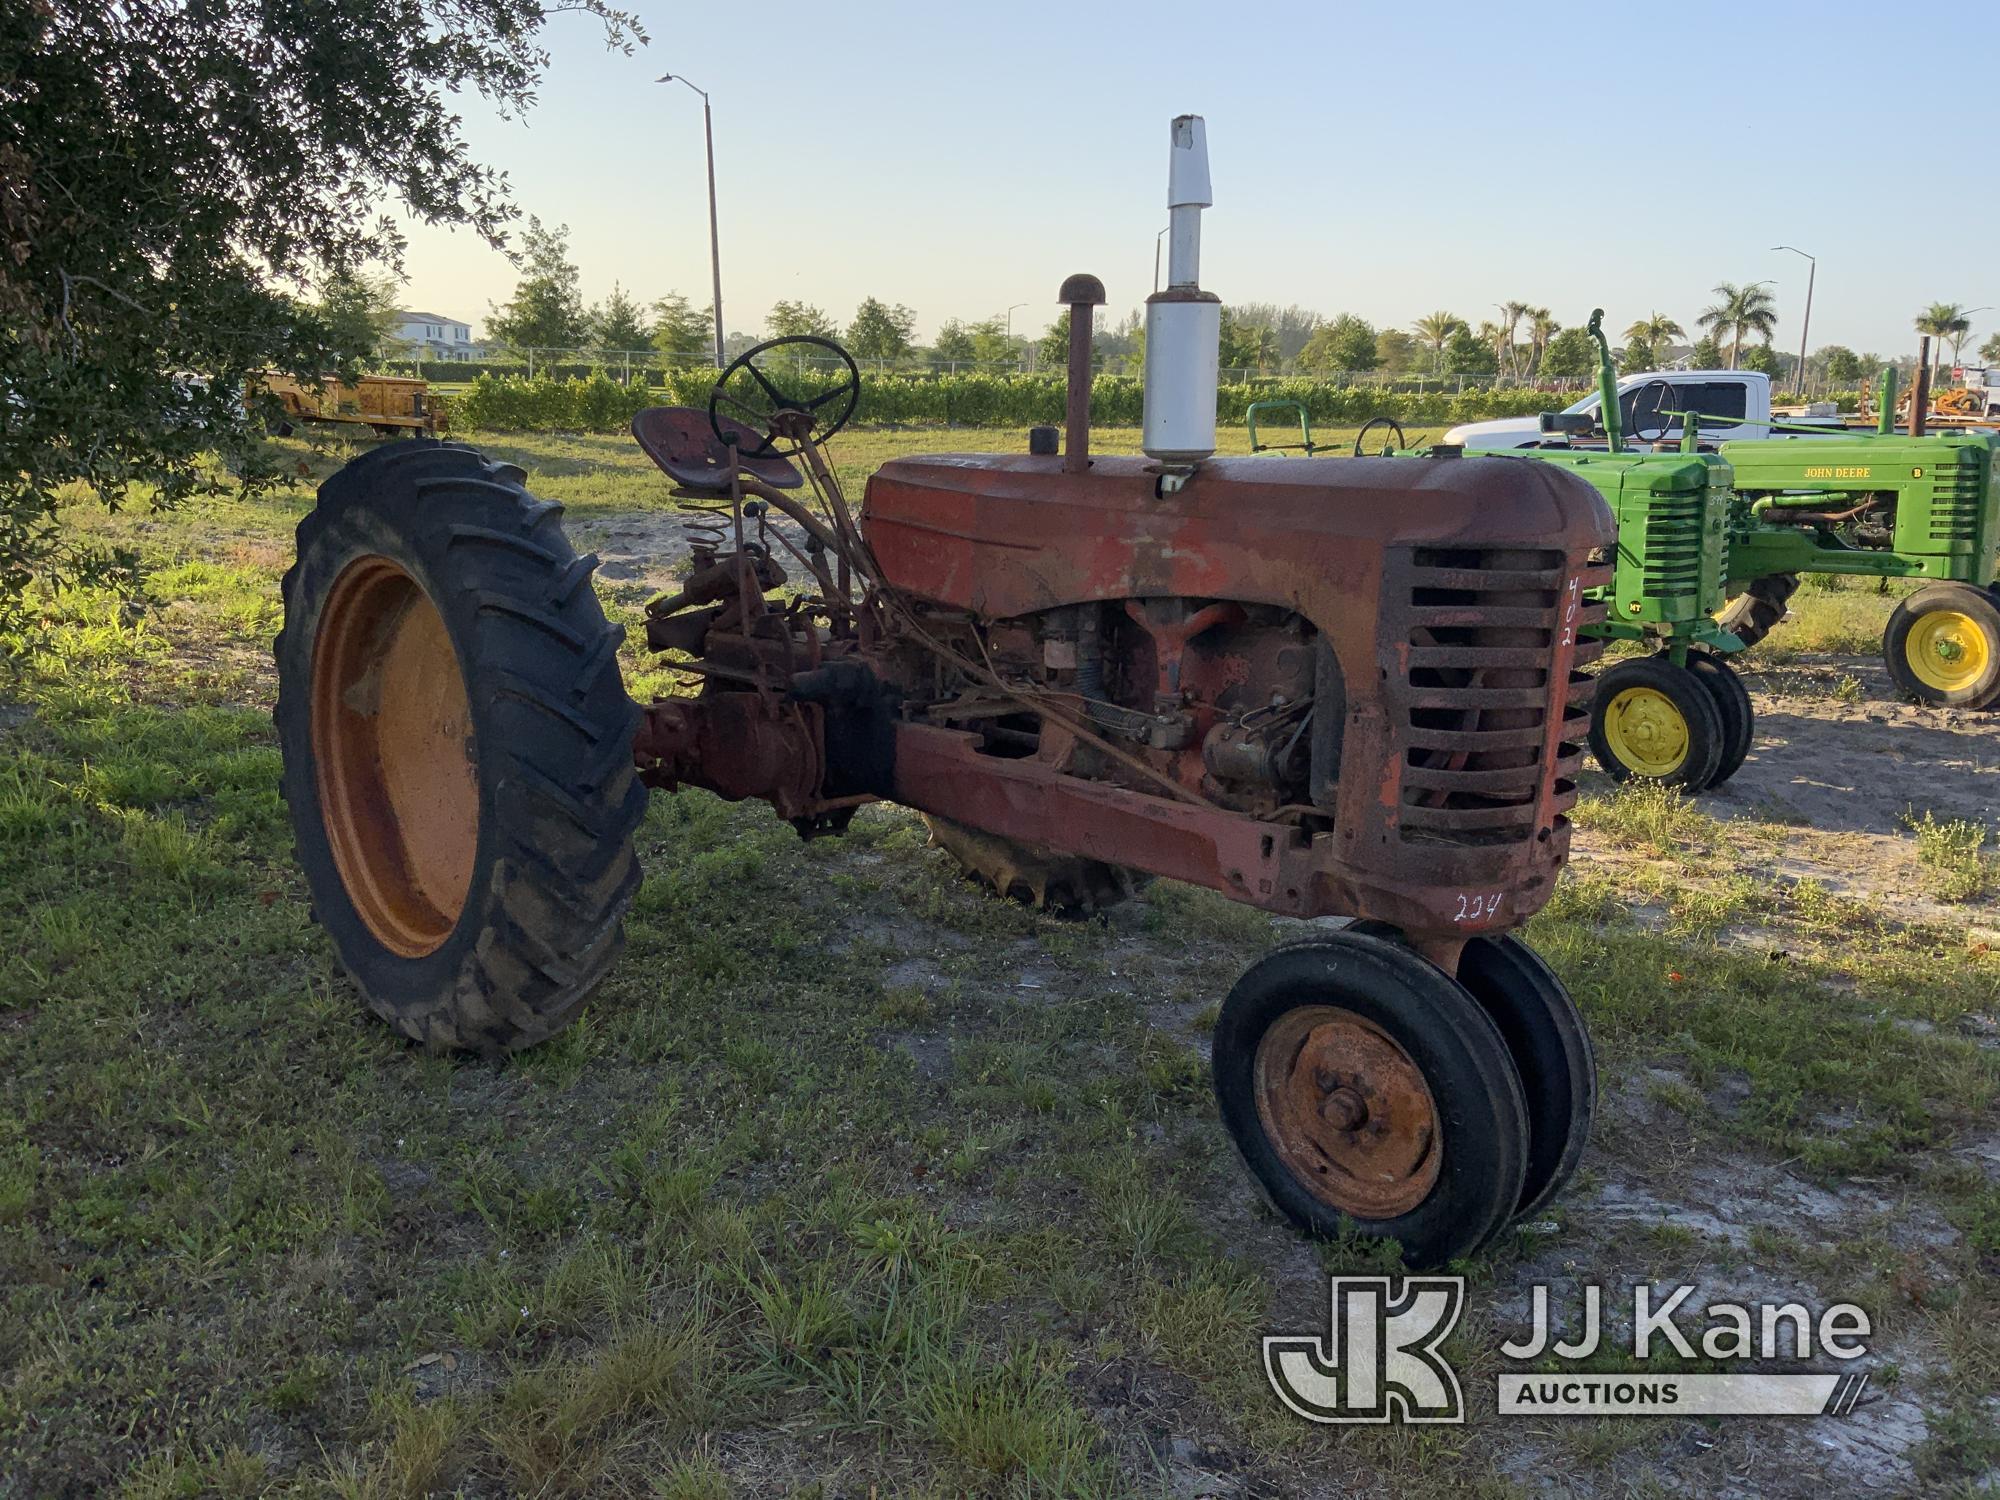 (Westlake, FL) 1950 Massey Harris Utility Tractor Not Running, Condition Unknown